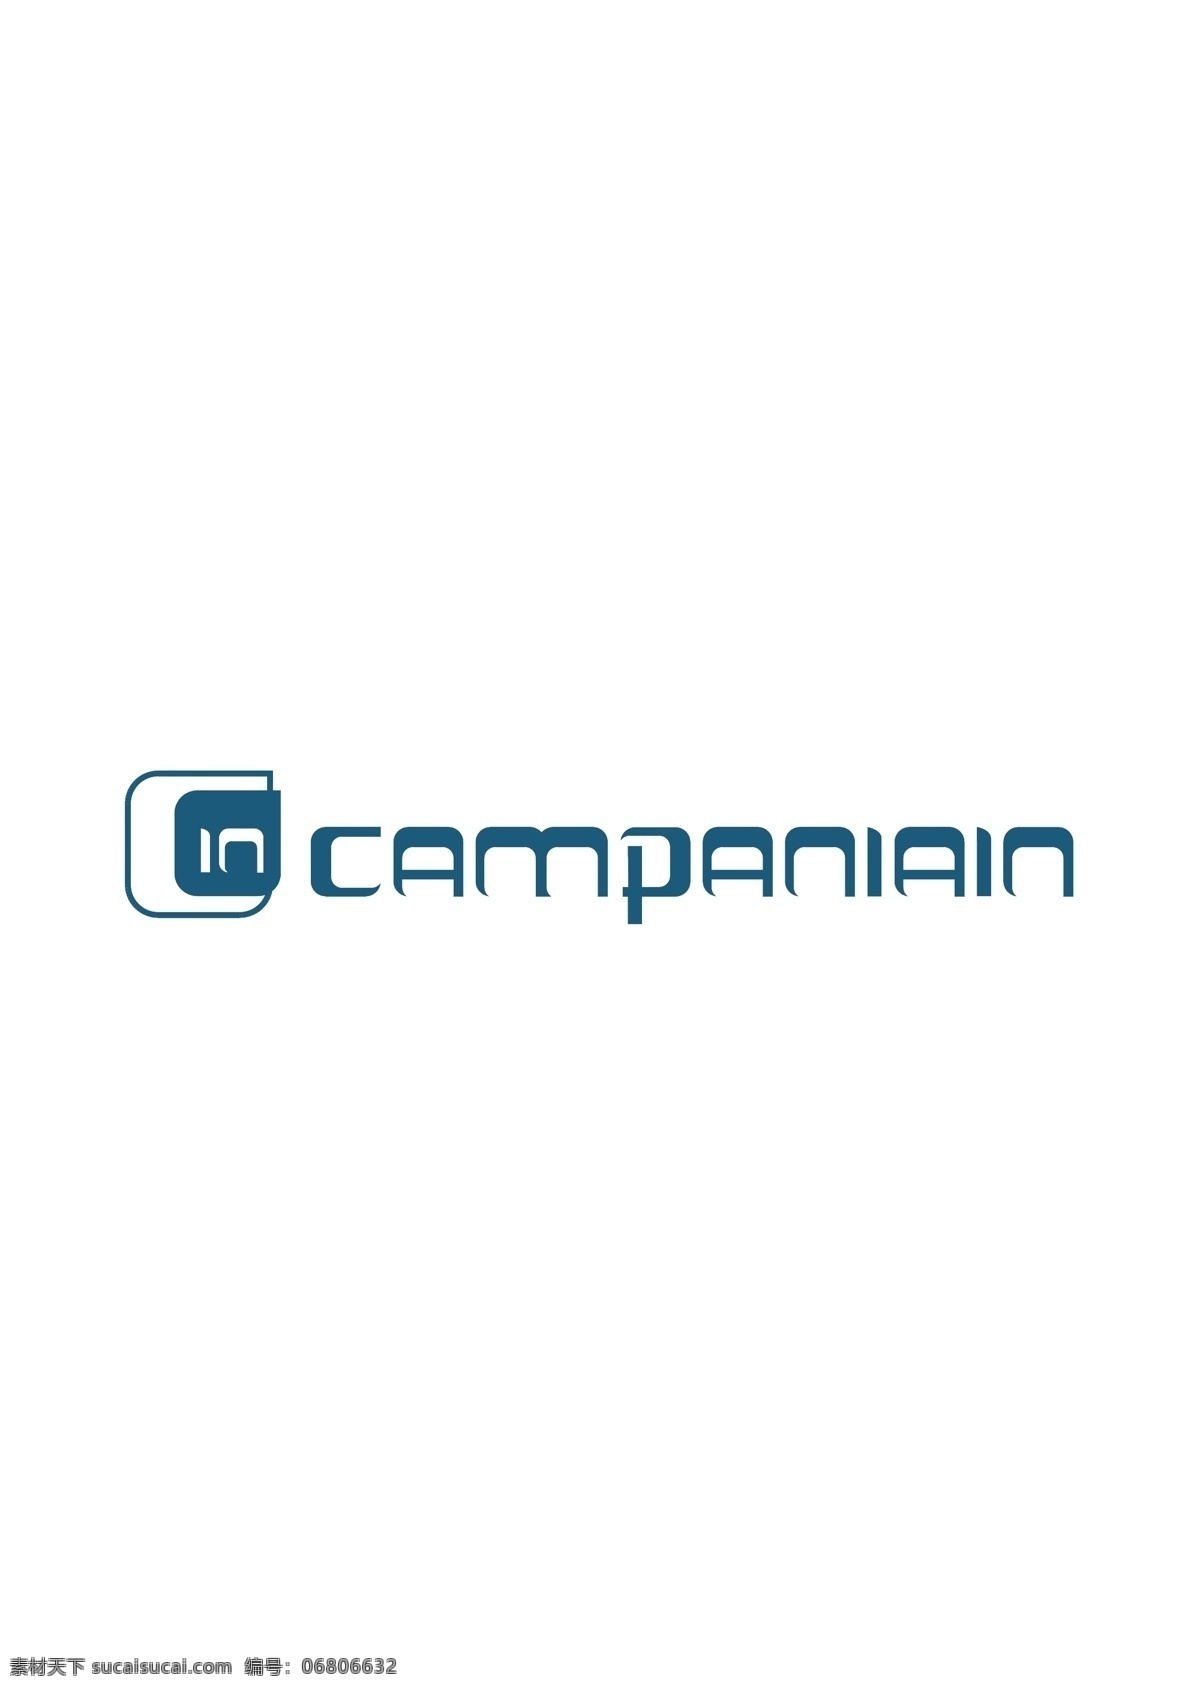 campaniain logo 设计欣赏 旅行社 标志设计 欣赏 矢量下载 网页矢量 商业矢量 logo大全 红色